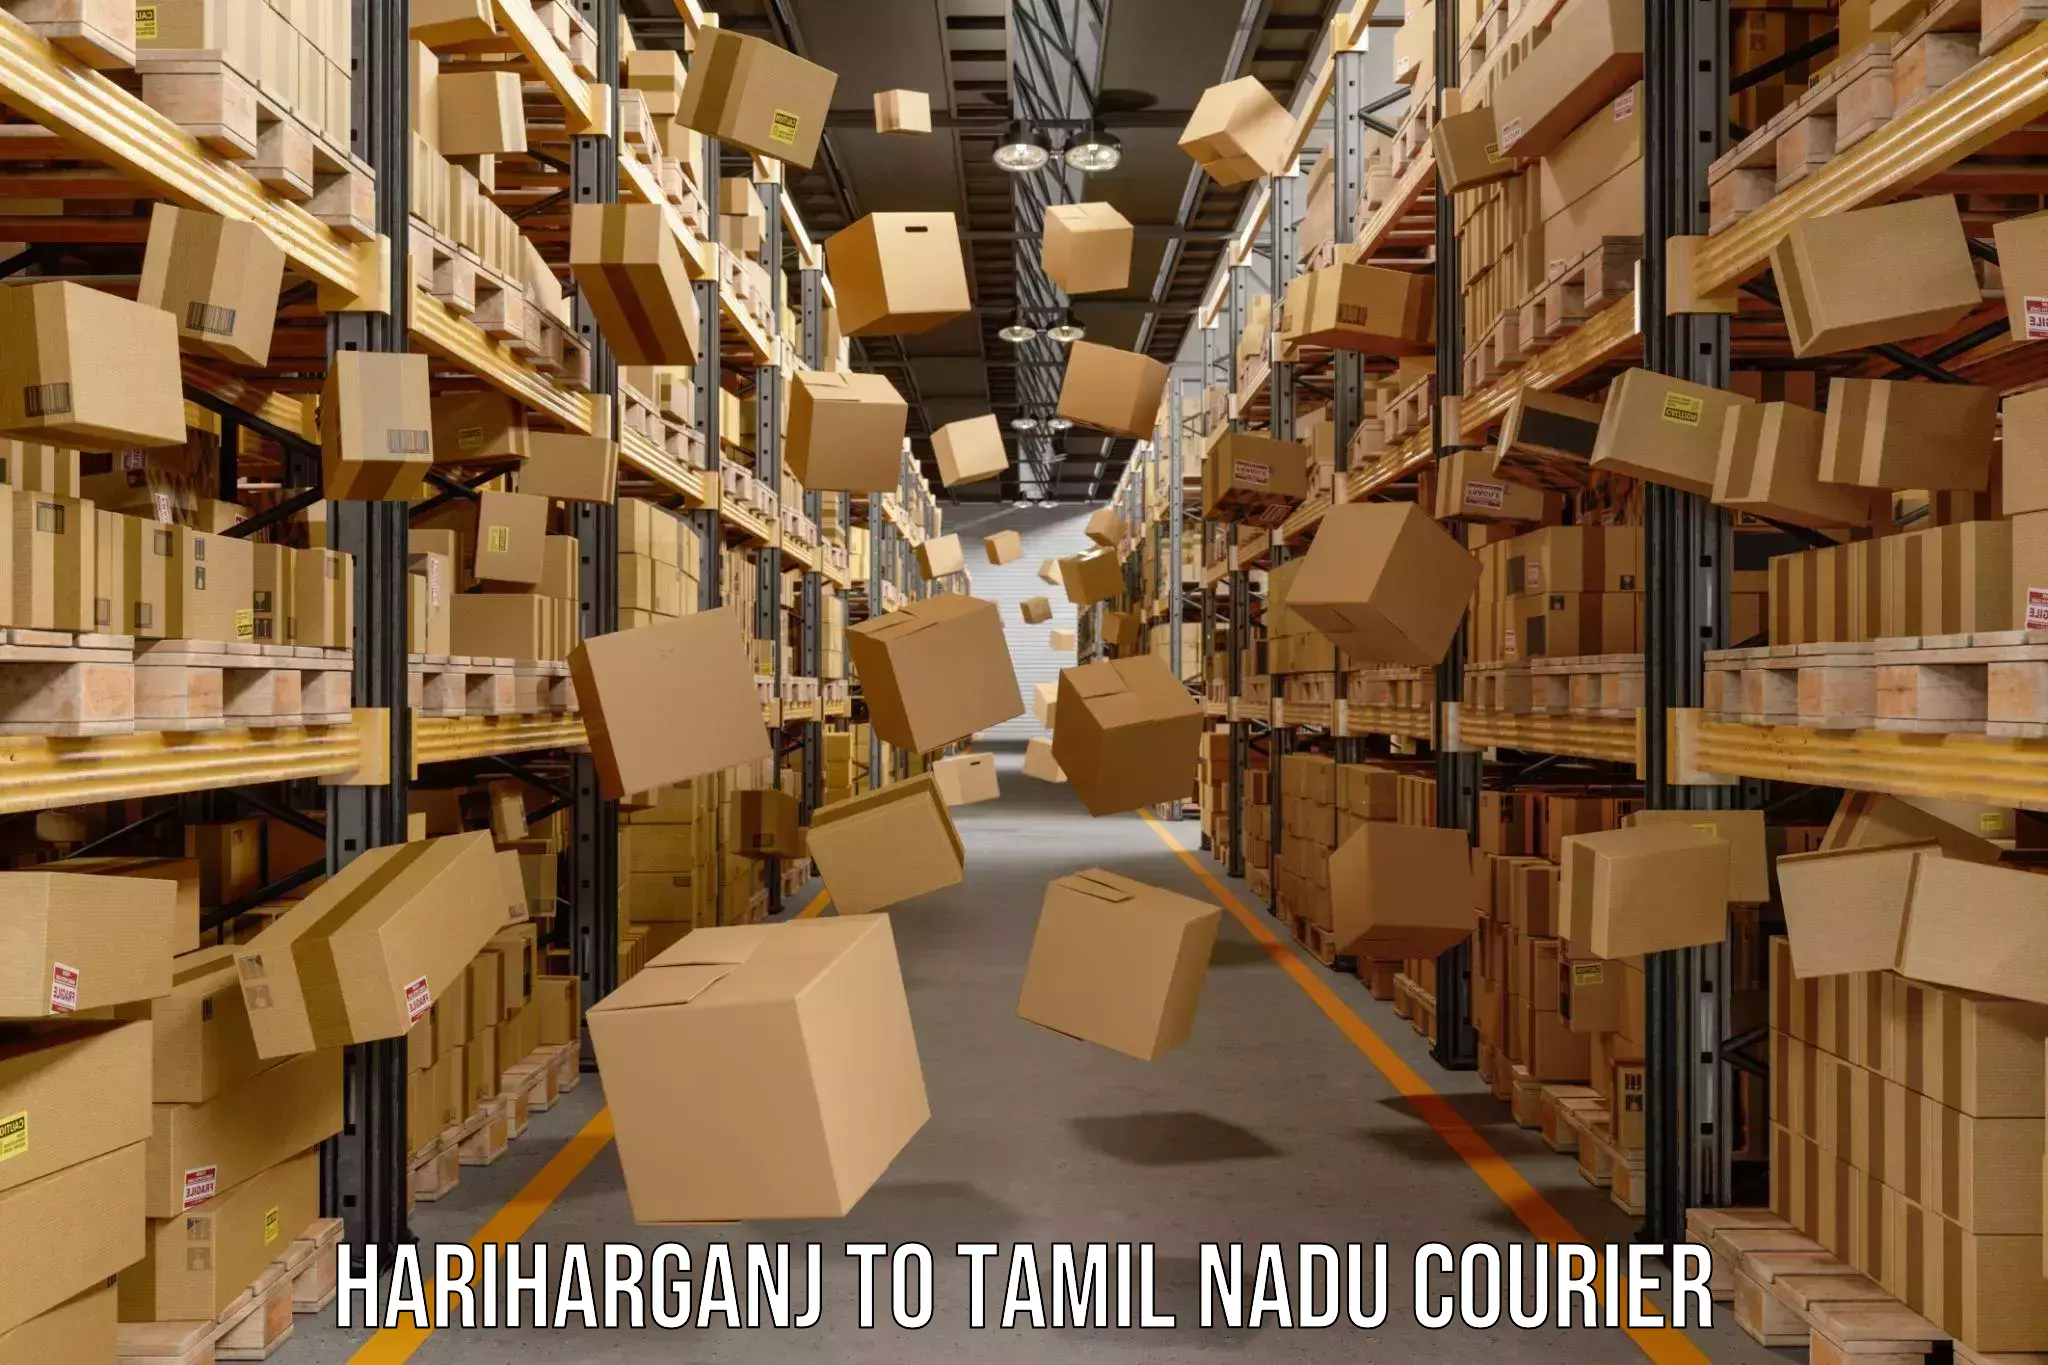 Courier service comparison Hariharganj to Chennai Port